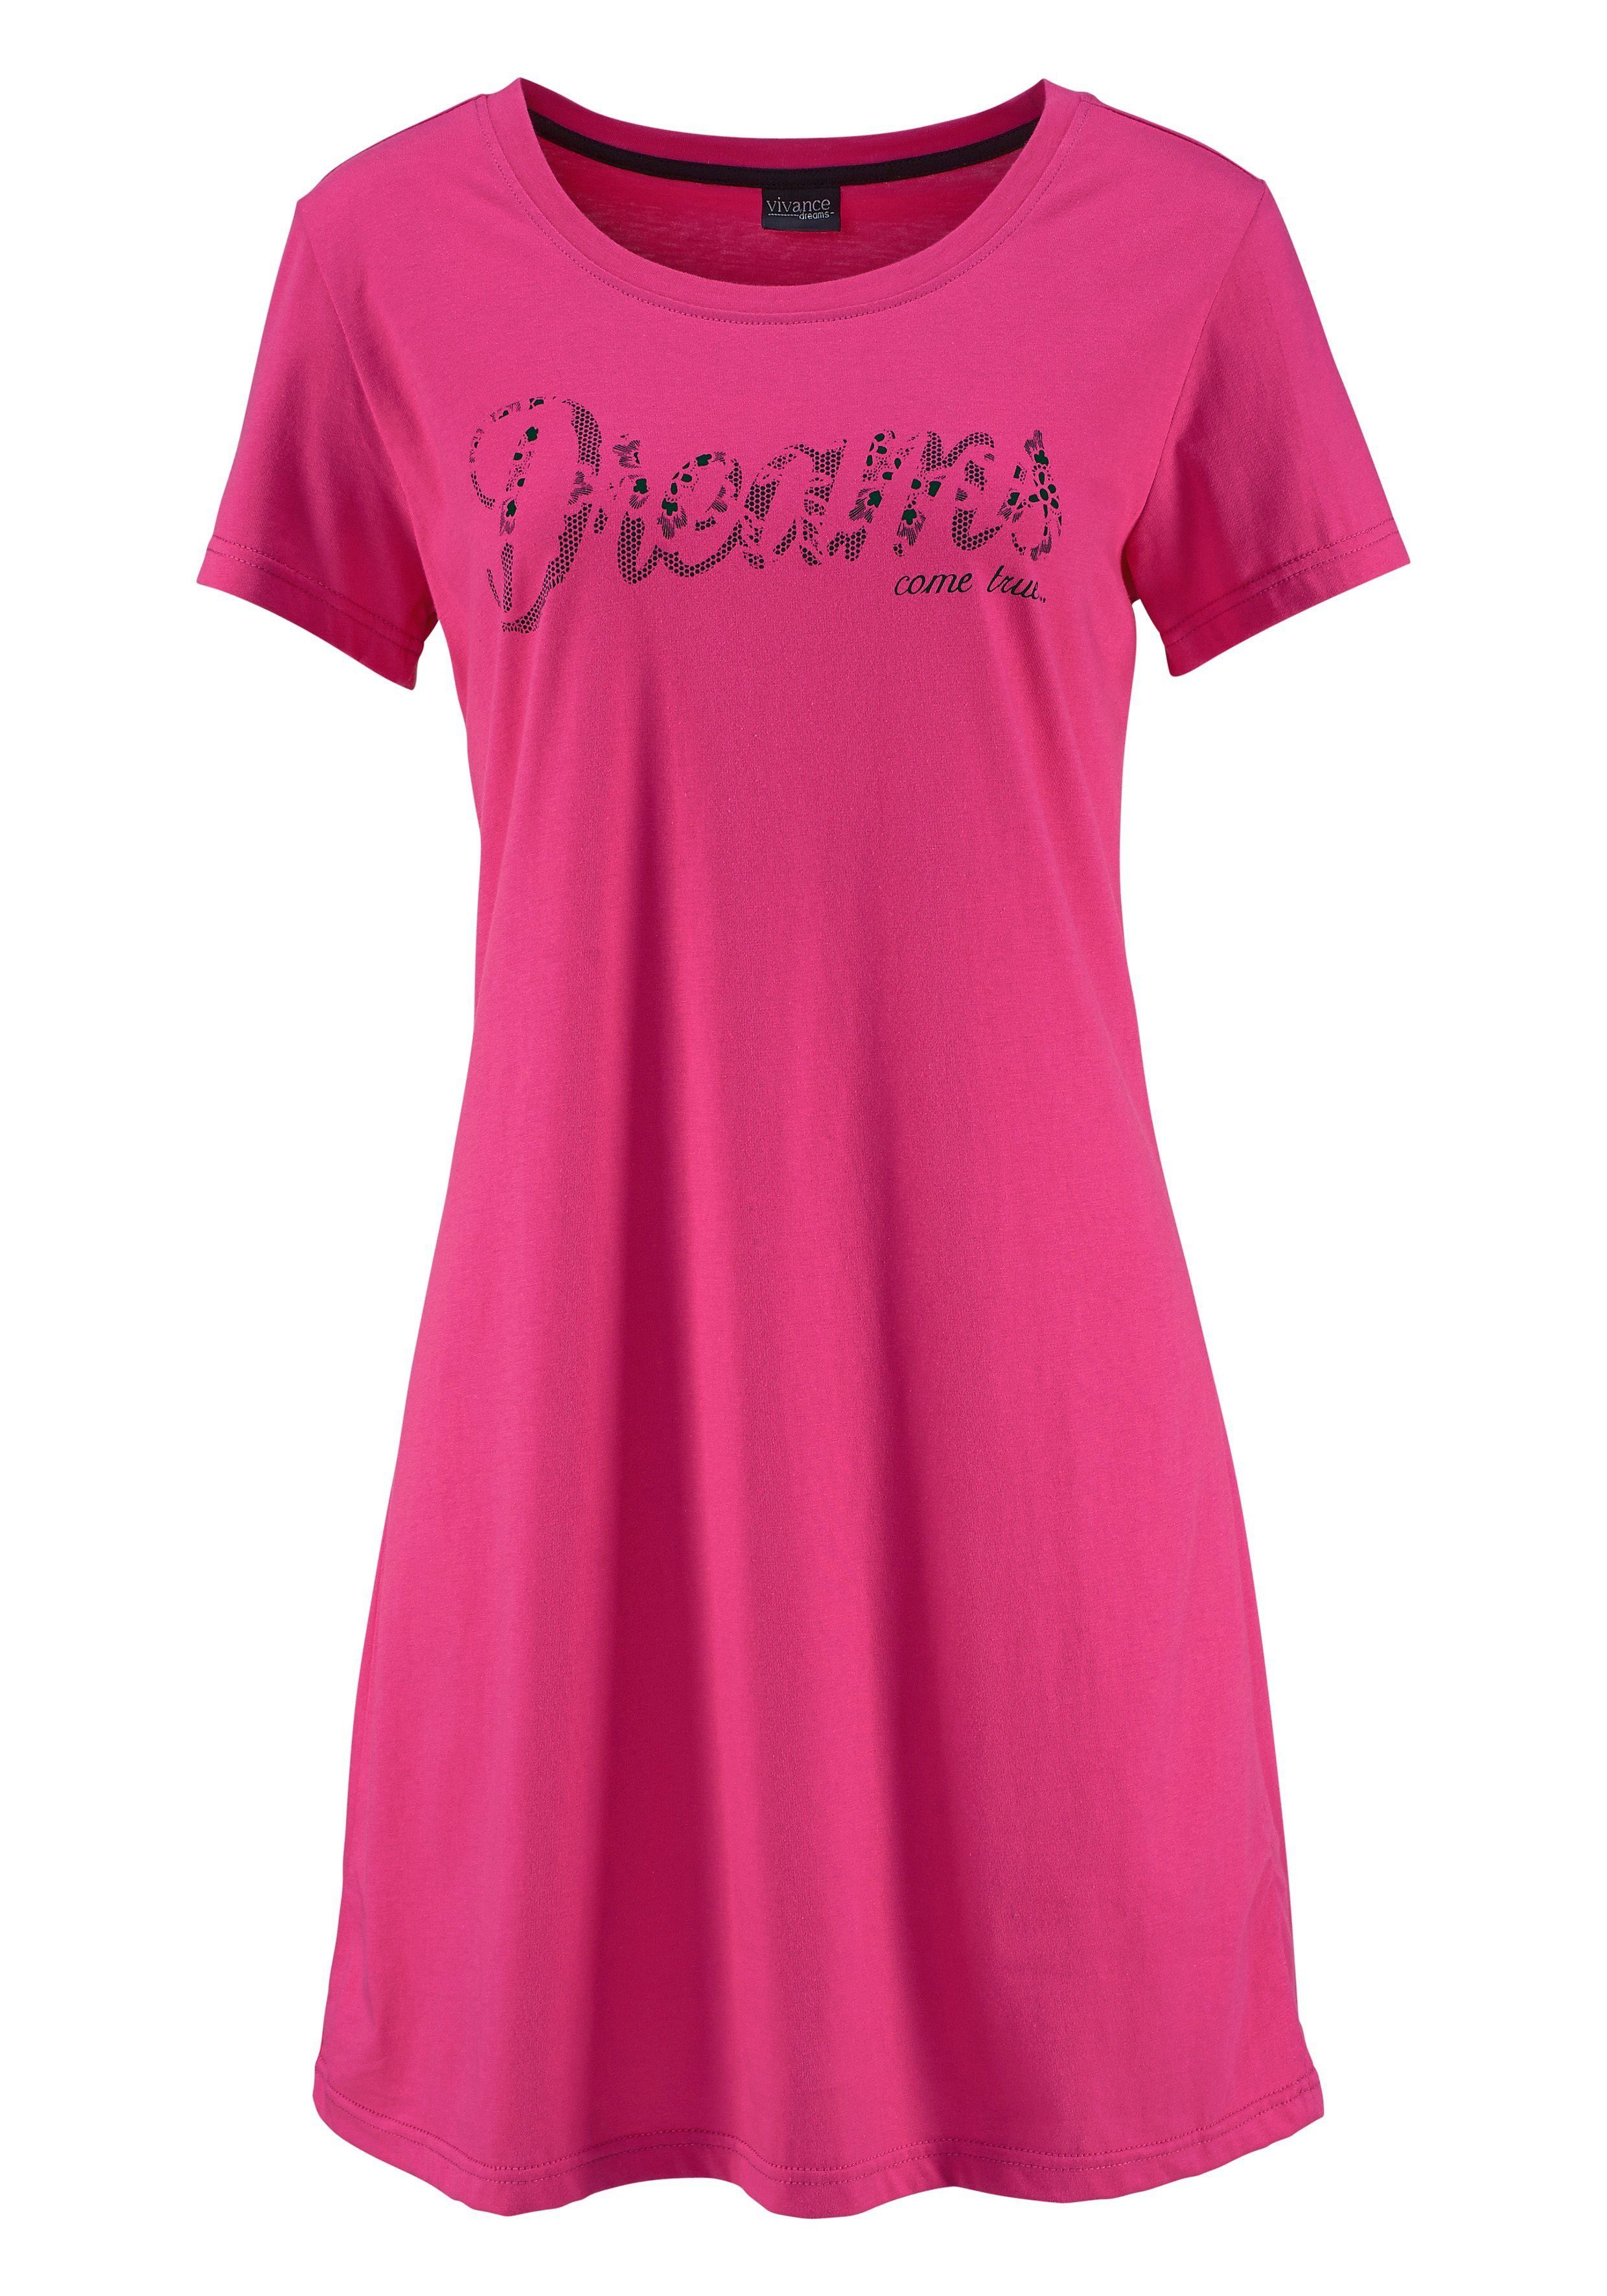 Spitzenoptik (2er-Pack) Print Dreams schwarz Sleepshirt Vivance mit pink, in